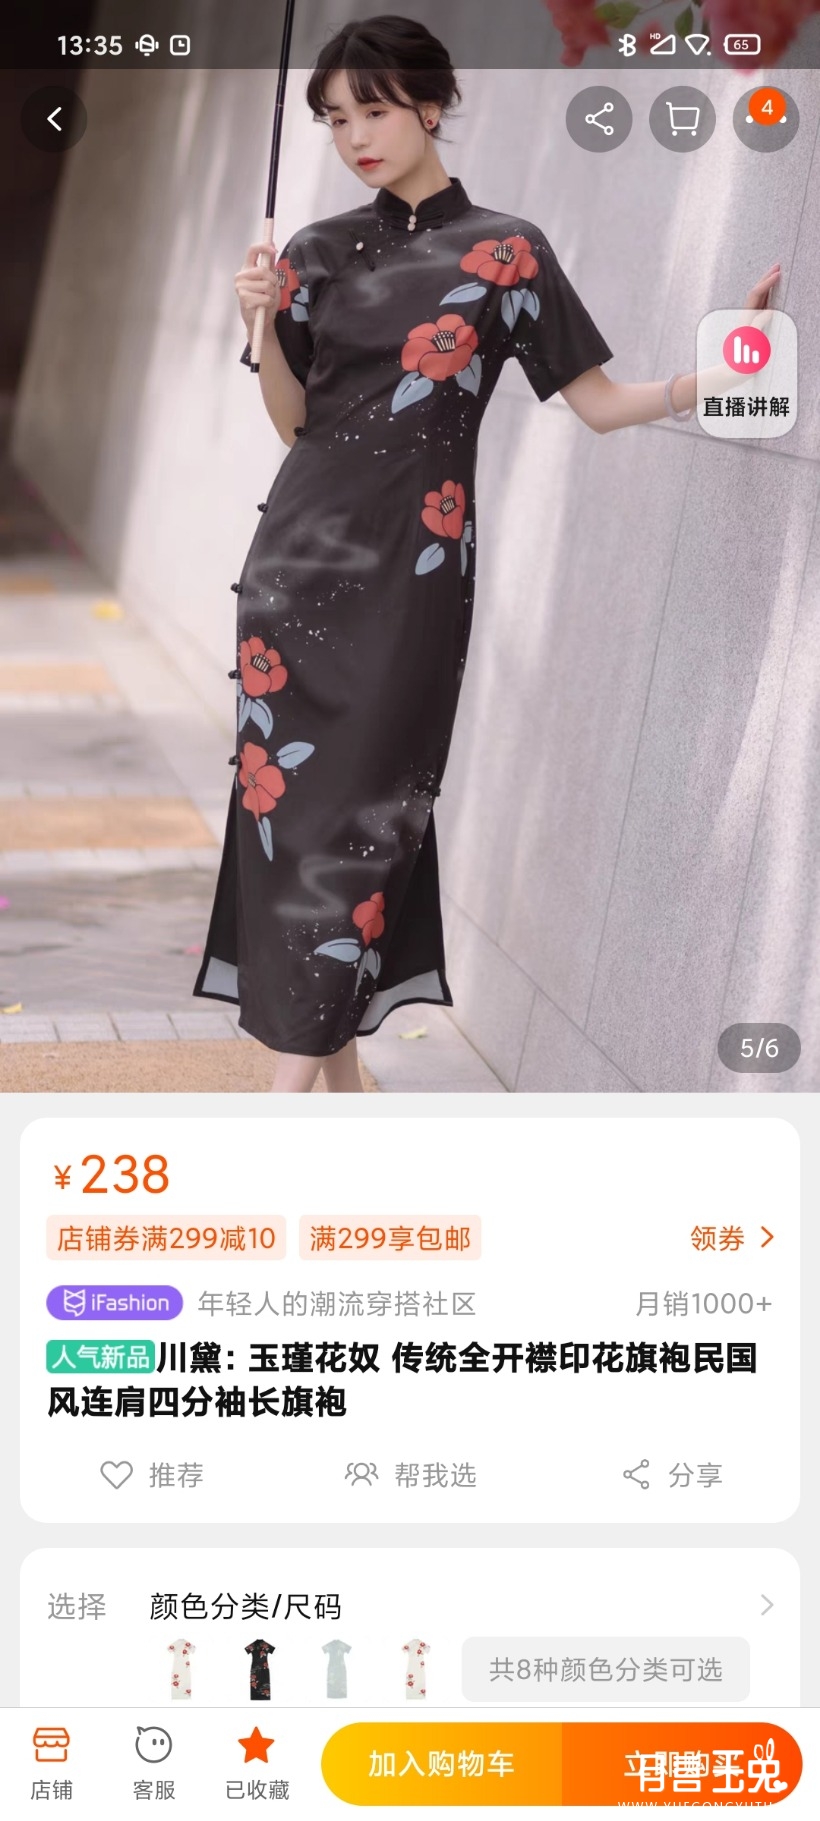 Screenshot_2021-03-31-13-35-37-693_com.taobao.taobao.jpg